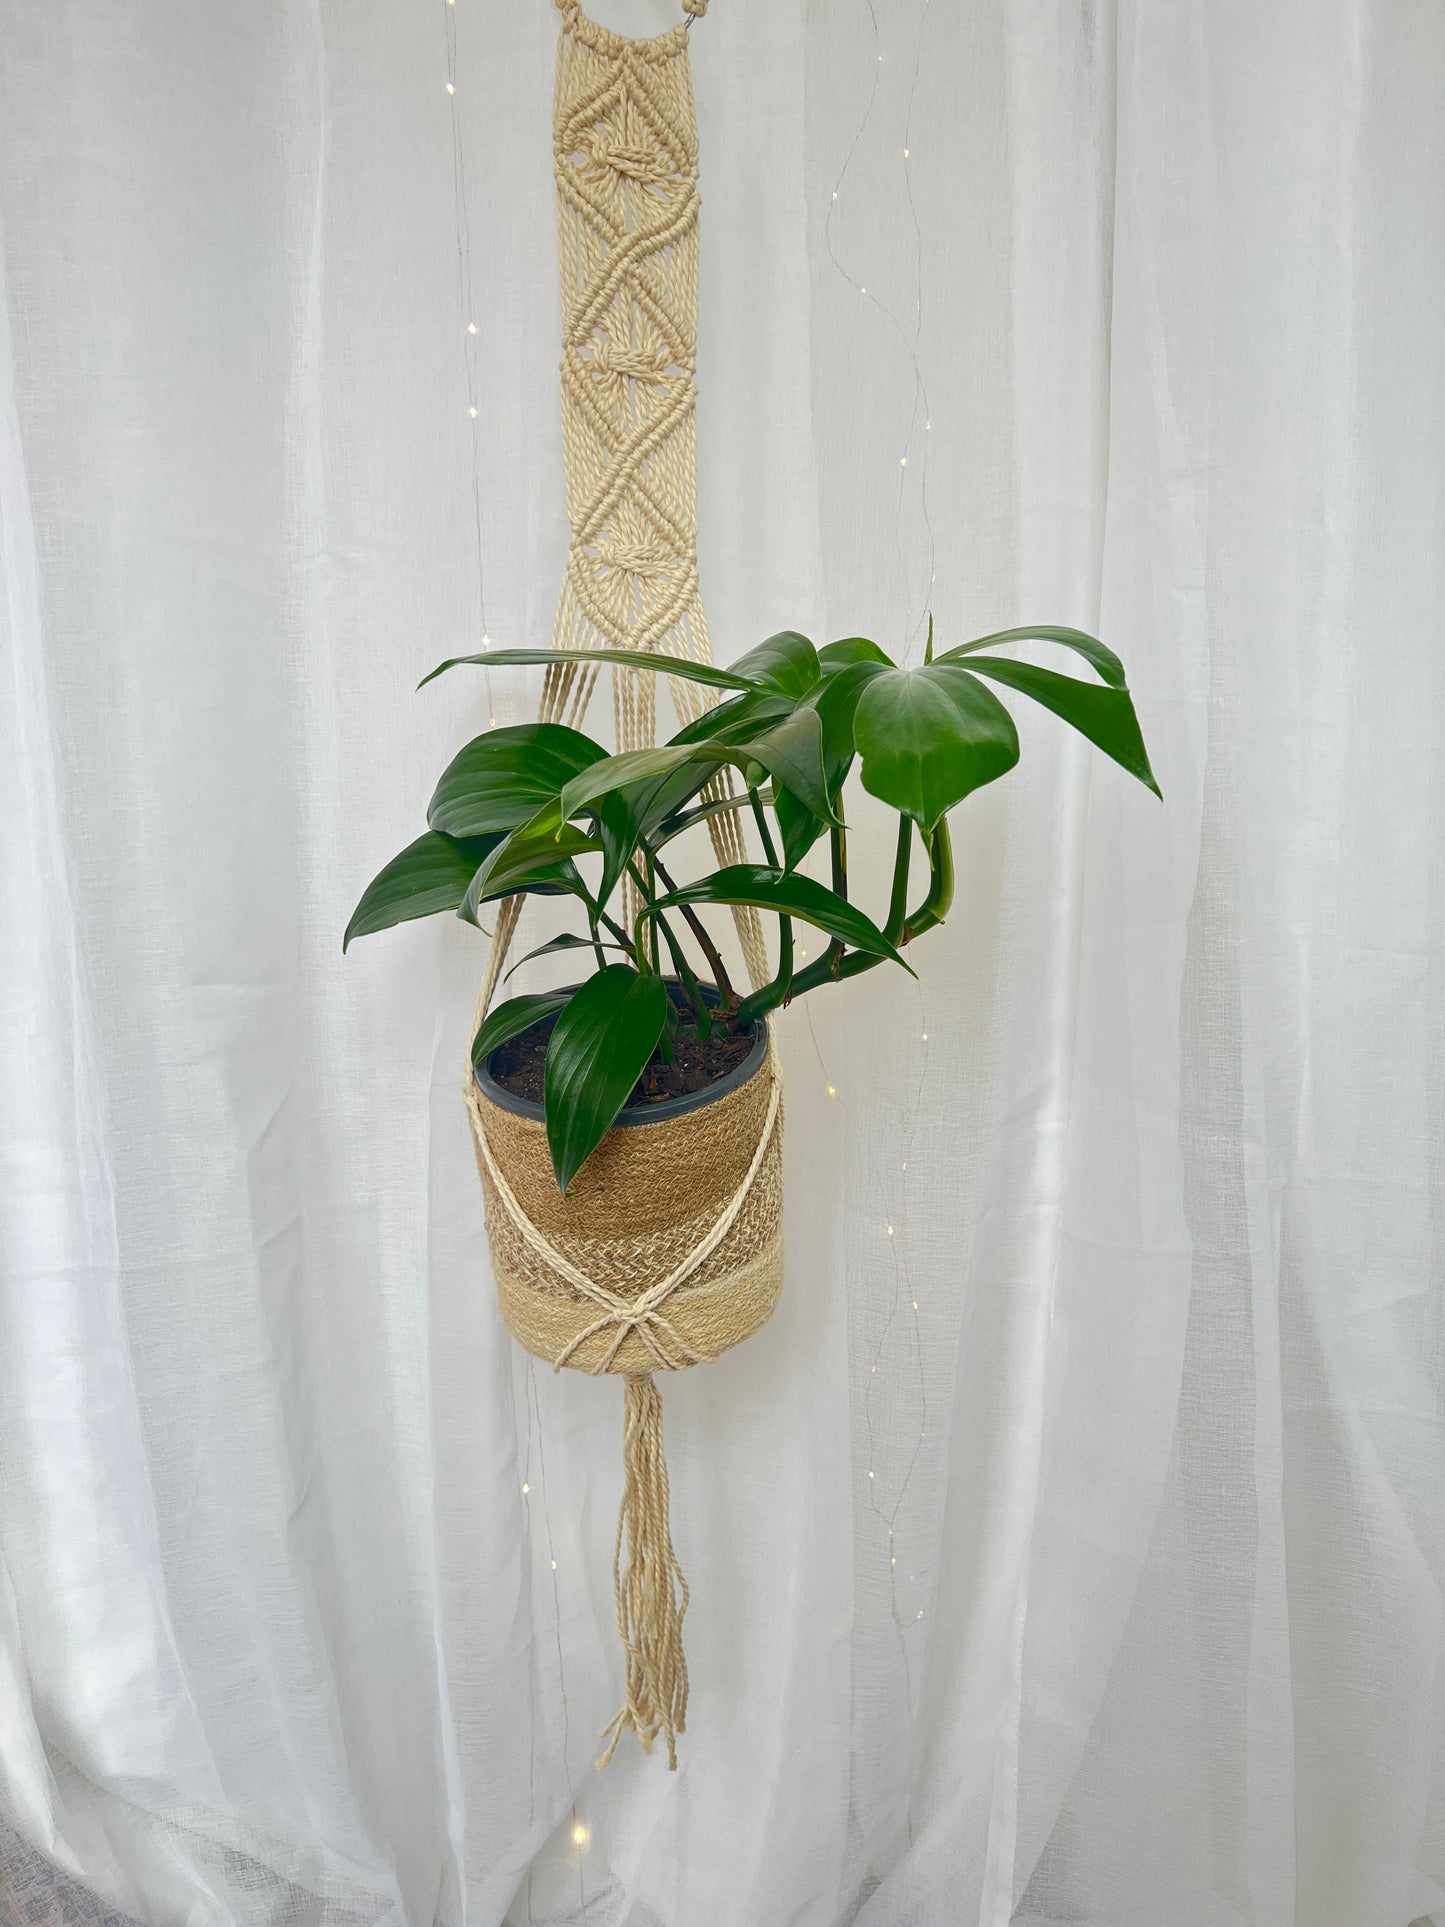 Dragon's Tail Plant Epipremnum Pinnatum 18cm Indoor Plant in Hand Woven Pot Planter and Macramé 120cm Boho Chic Room Décor